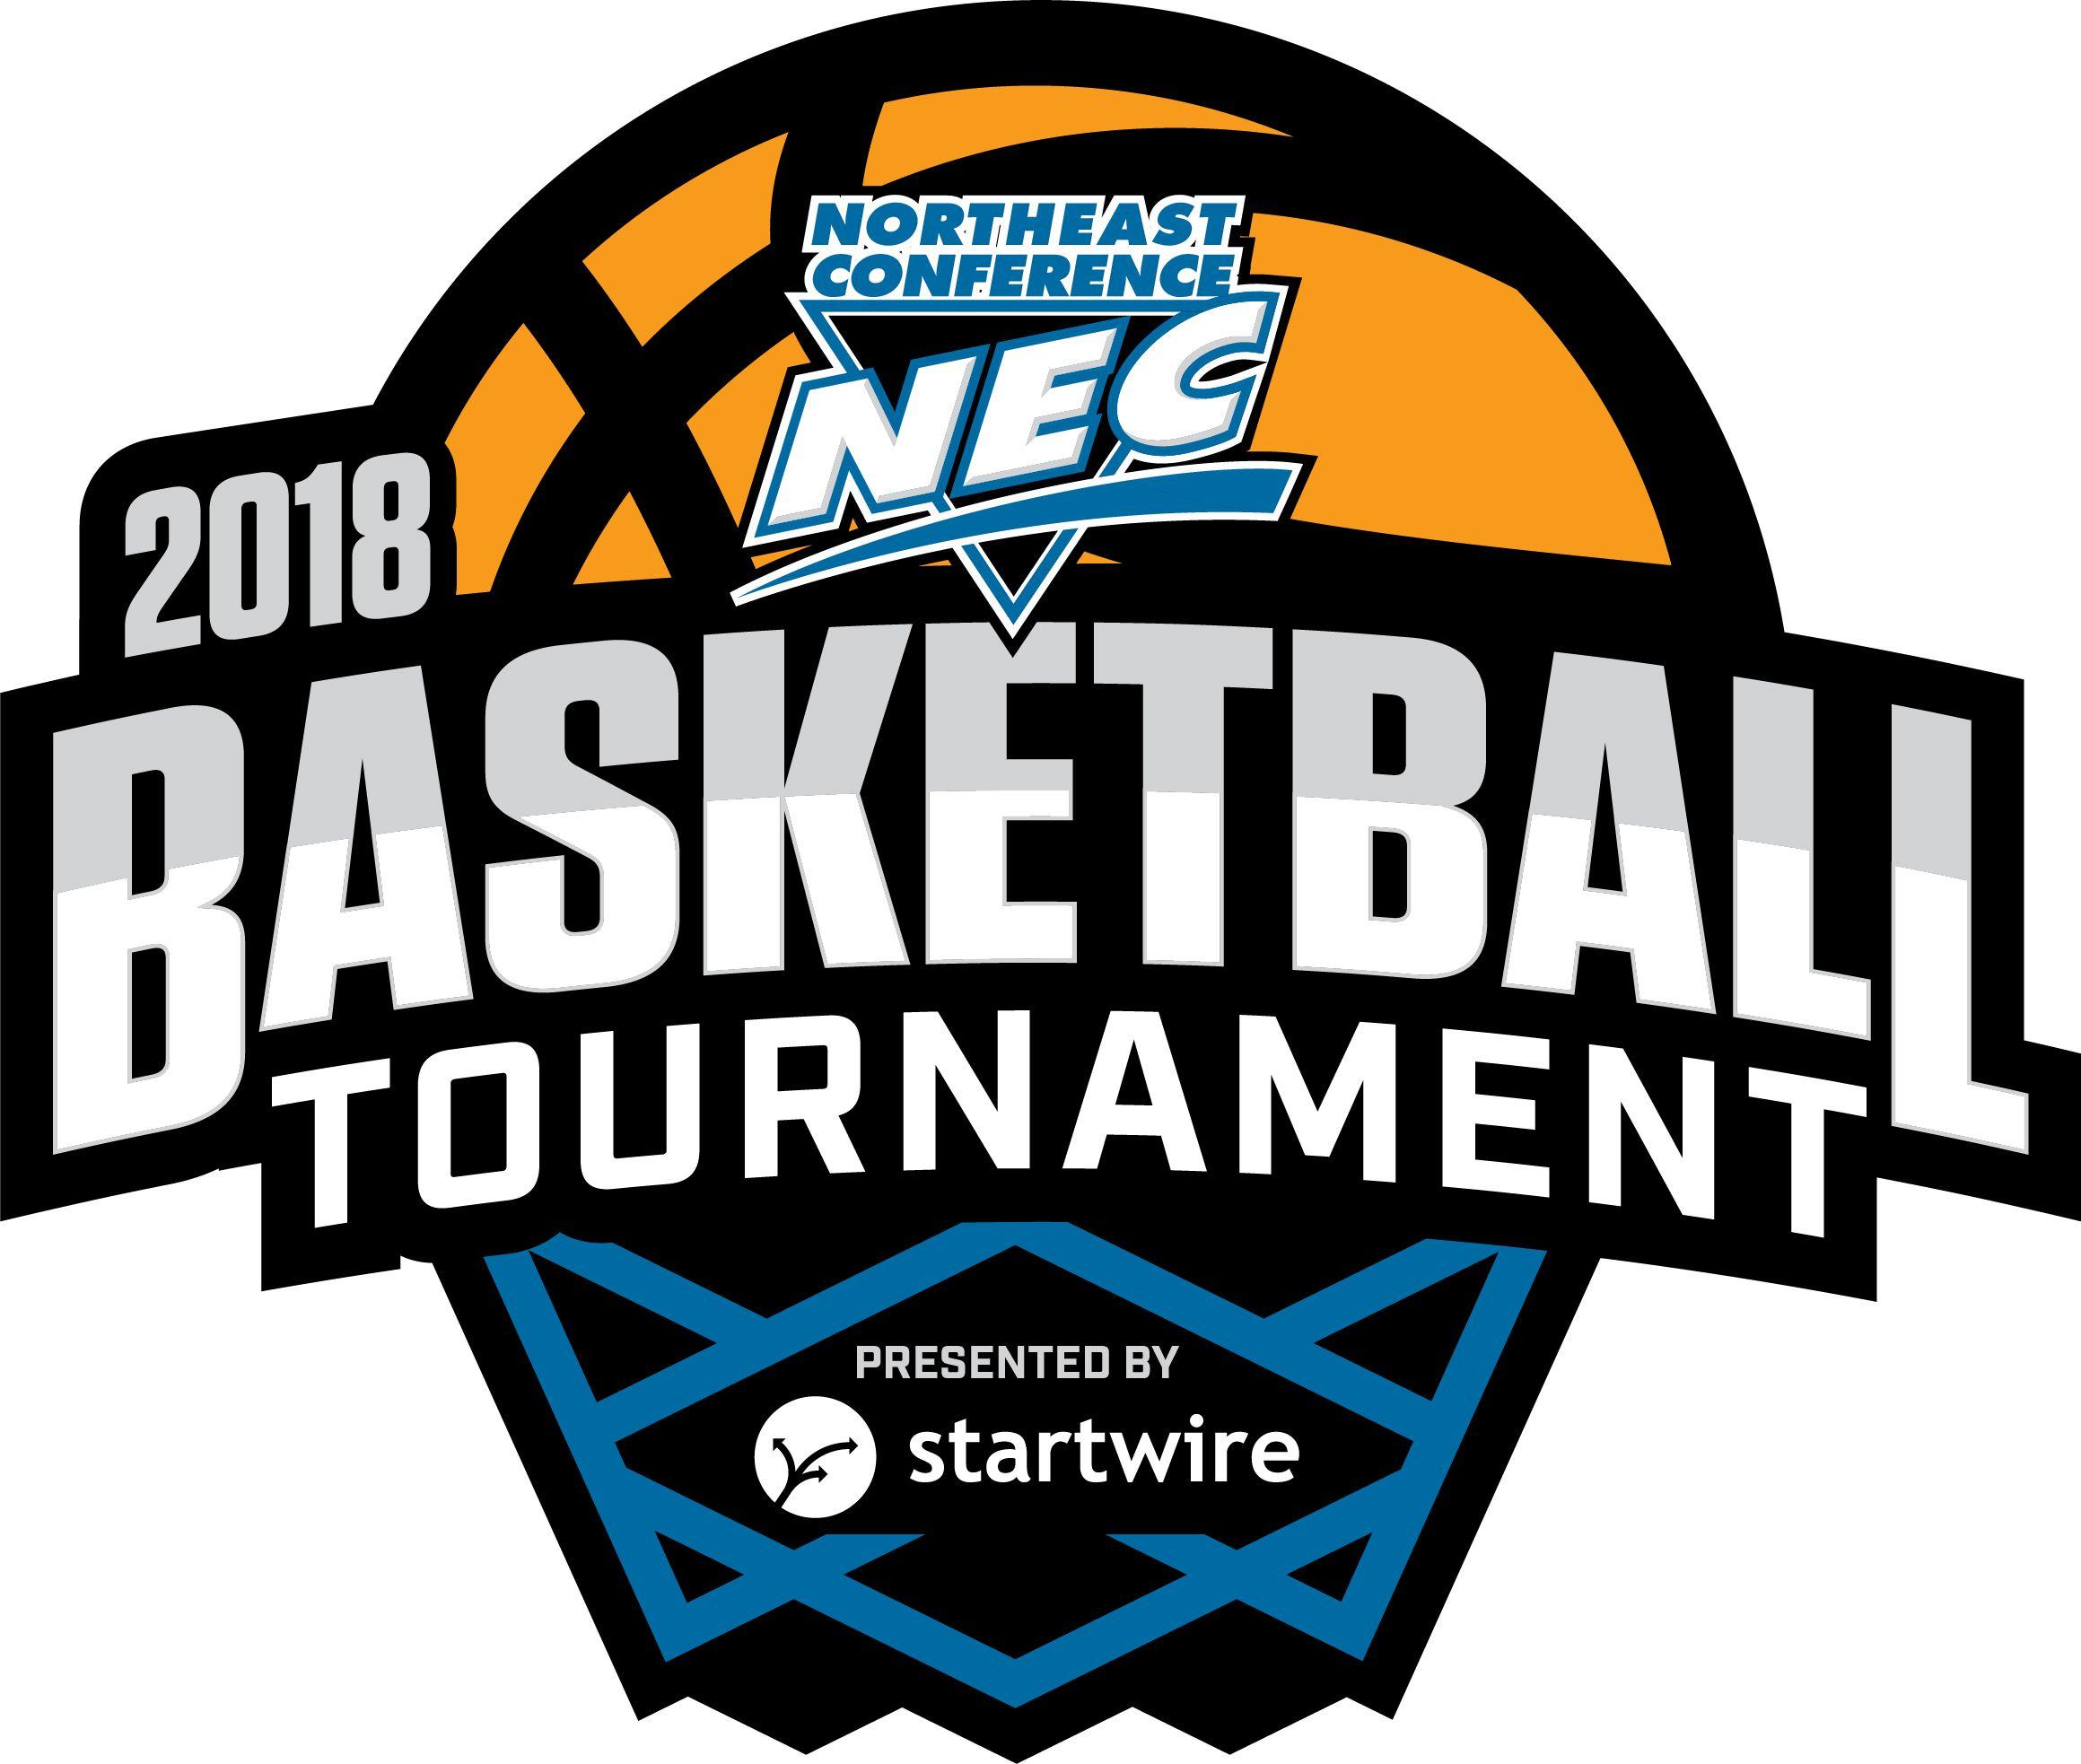 Cool Basketball Tournament Logo - Northeast Conference - Northeast Conference Announces 2018-19 ...